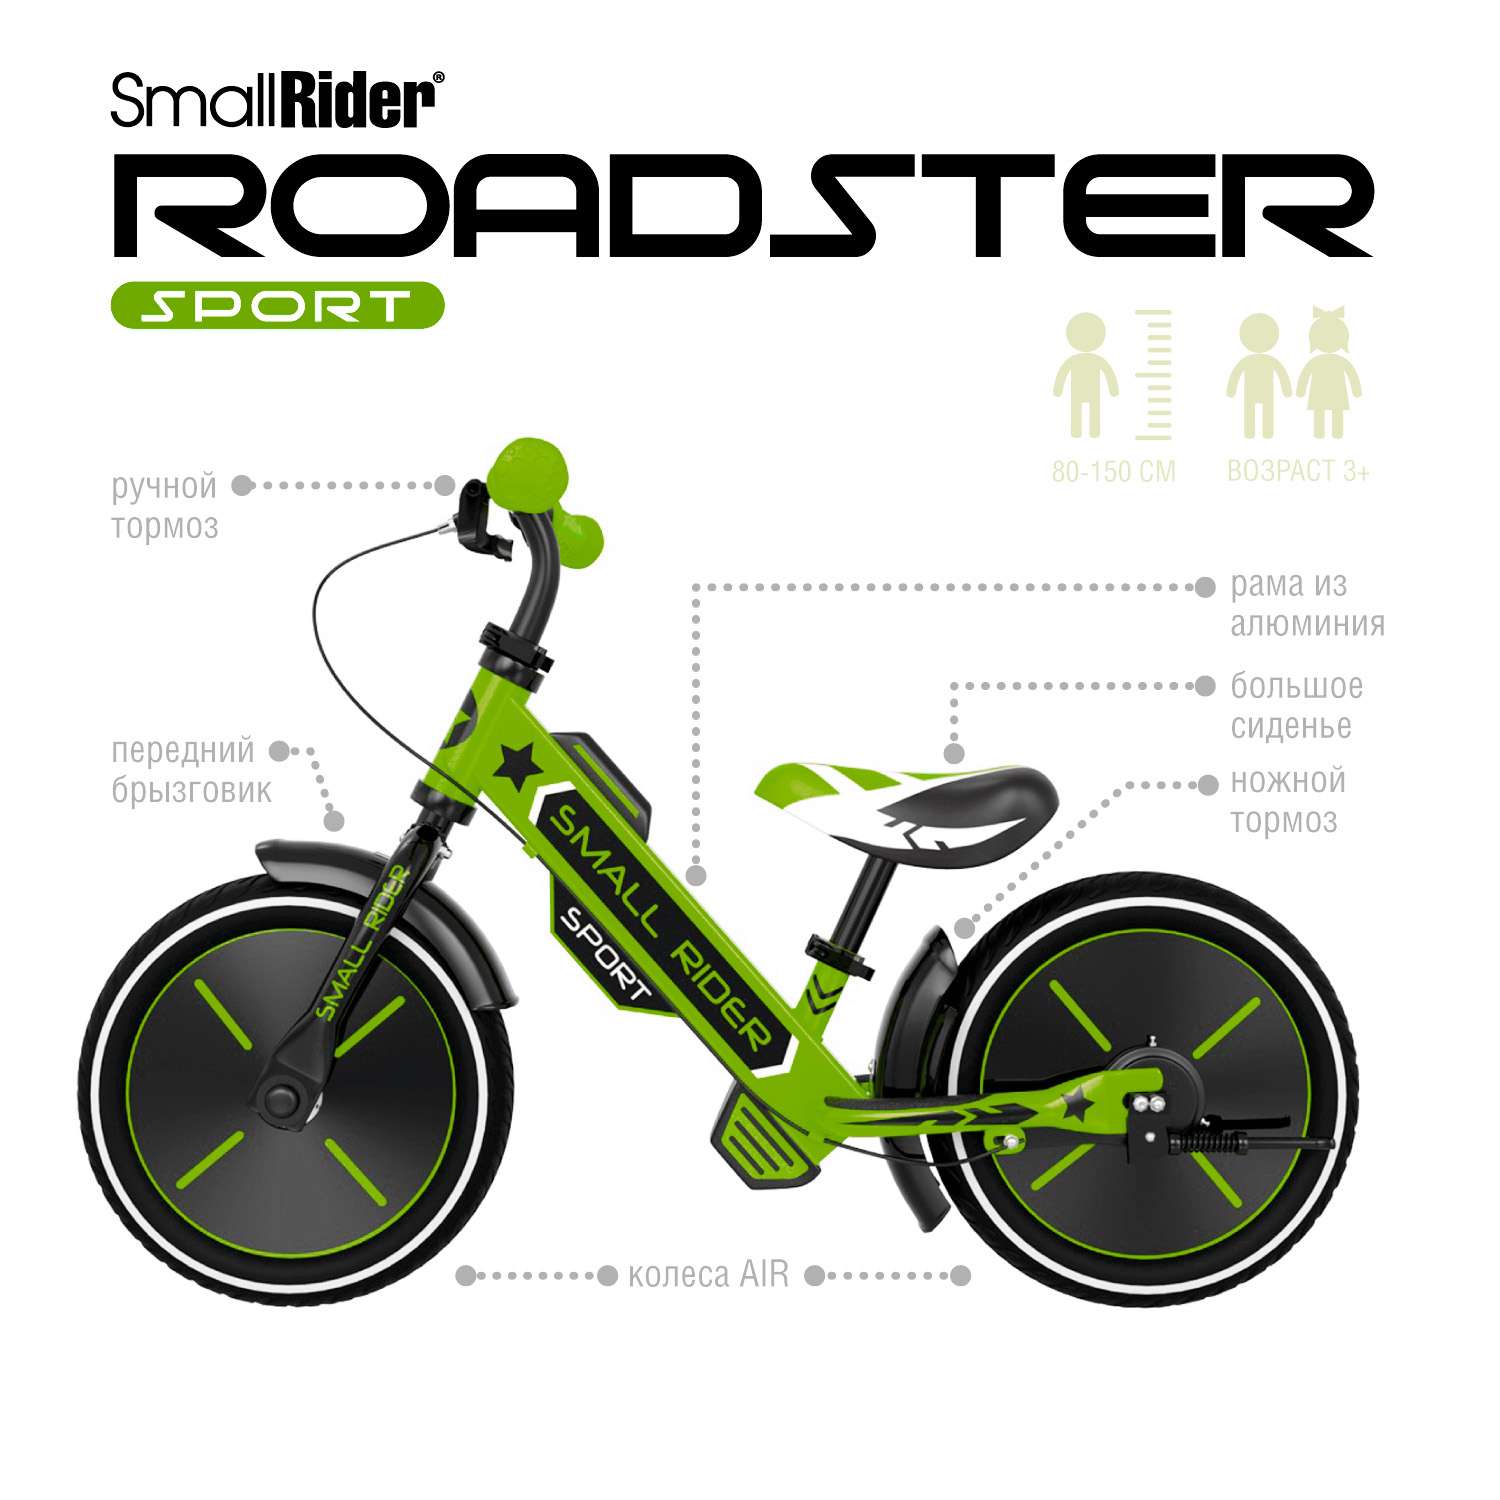 Беговел Small Rider Roadster Sport Air зеленый - фото 2